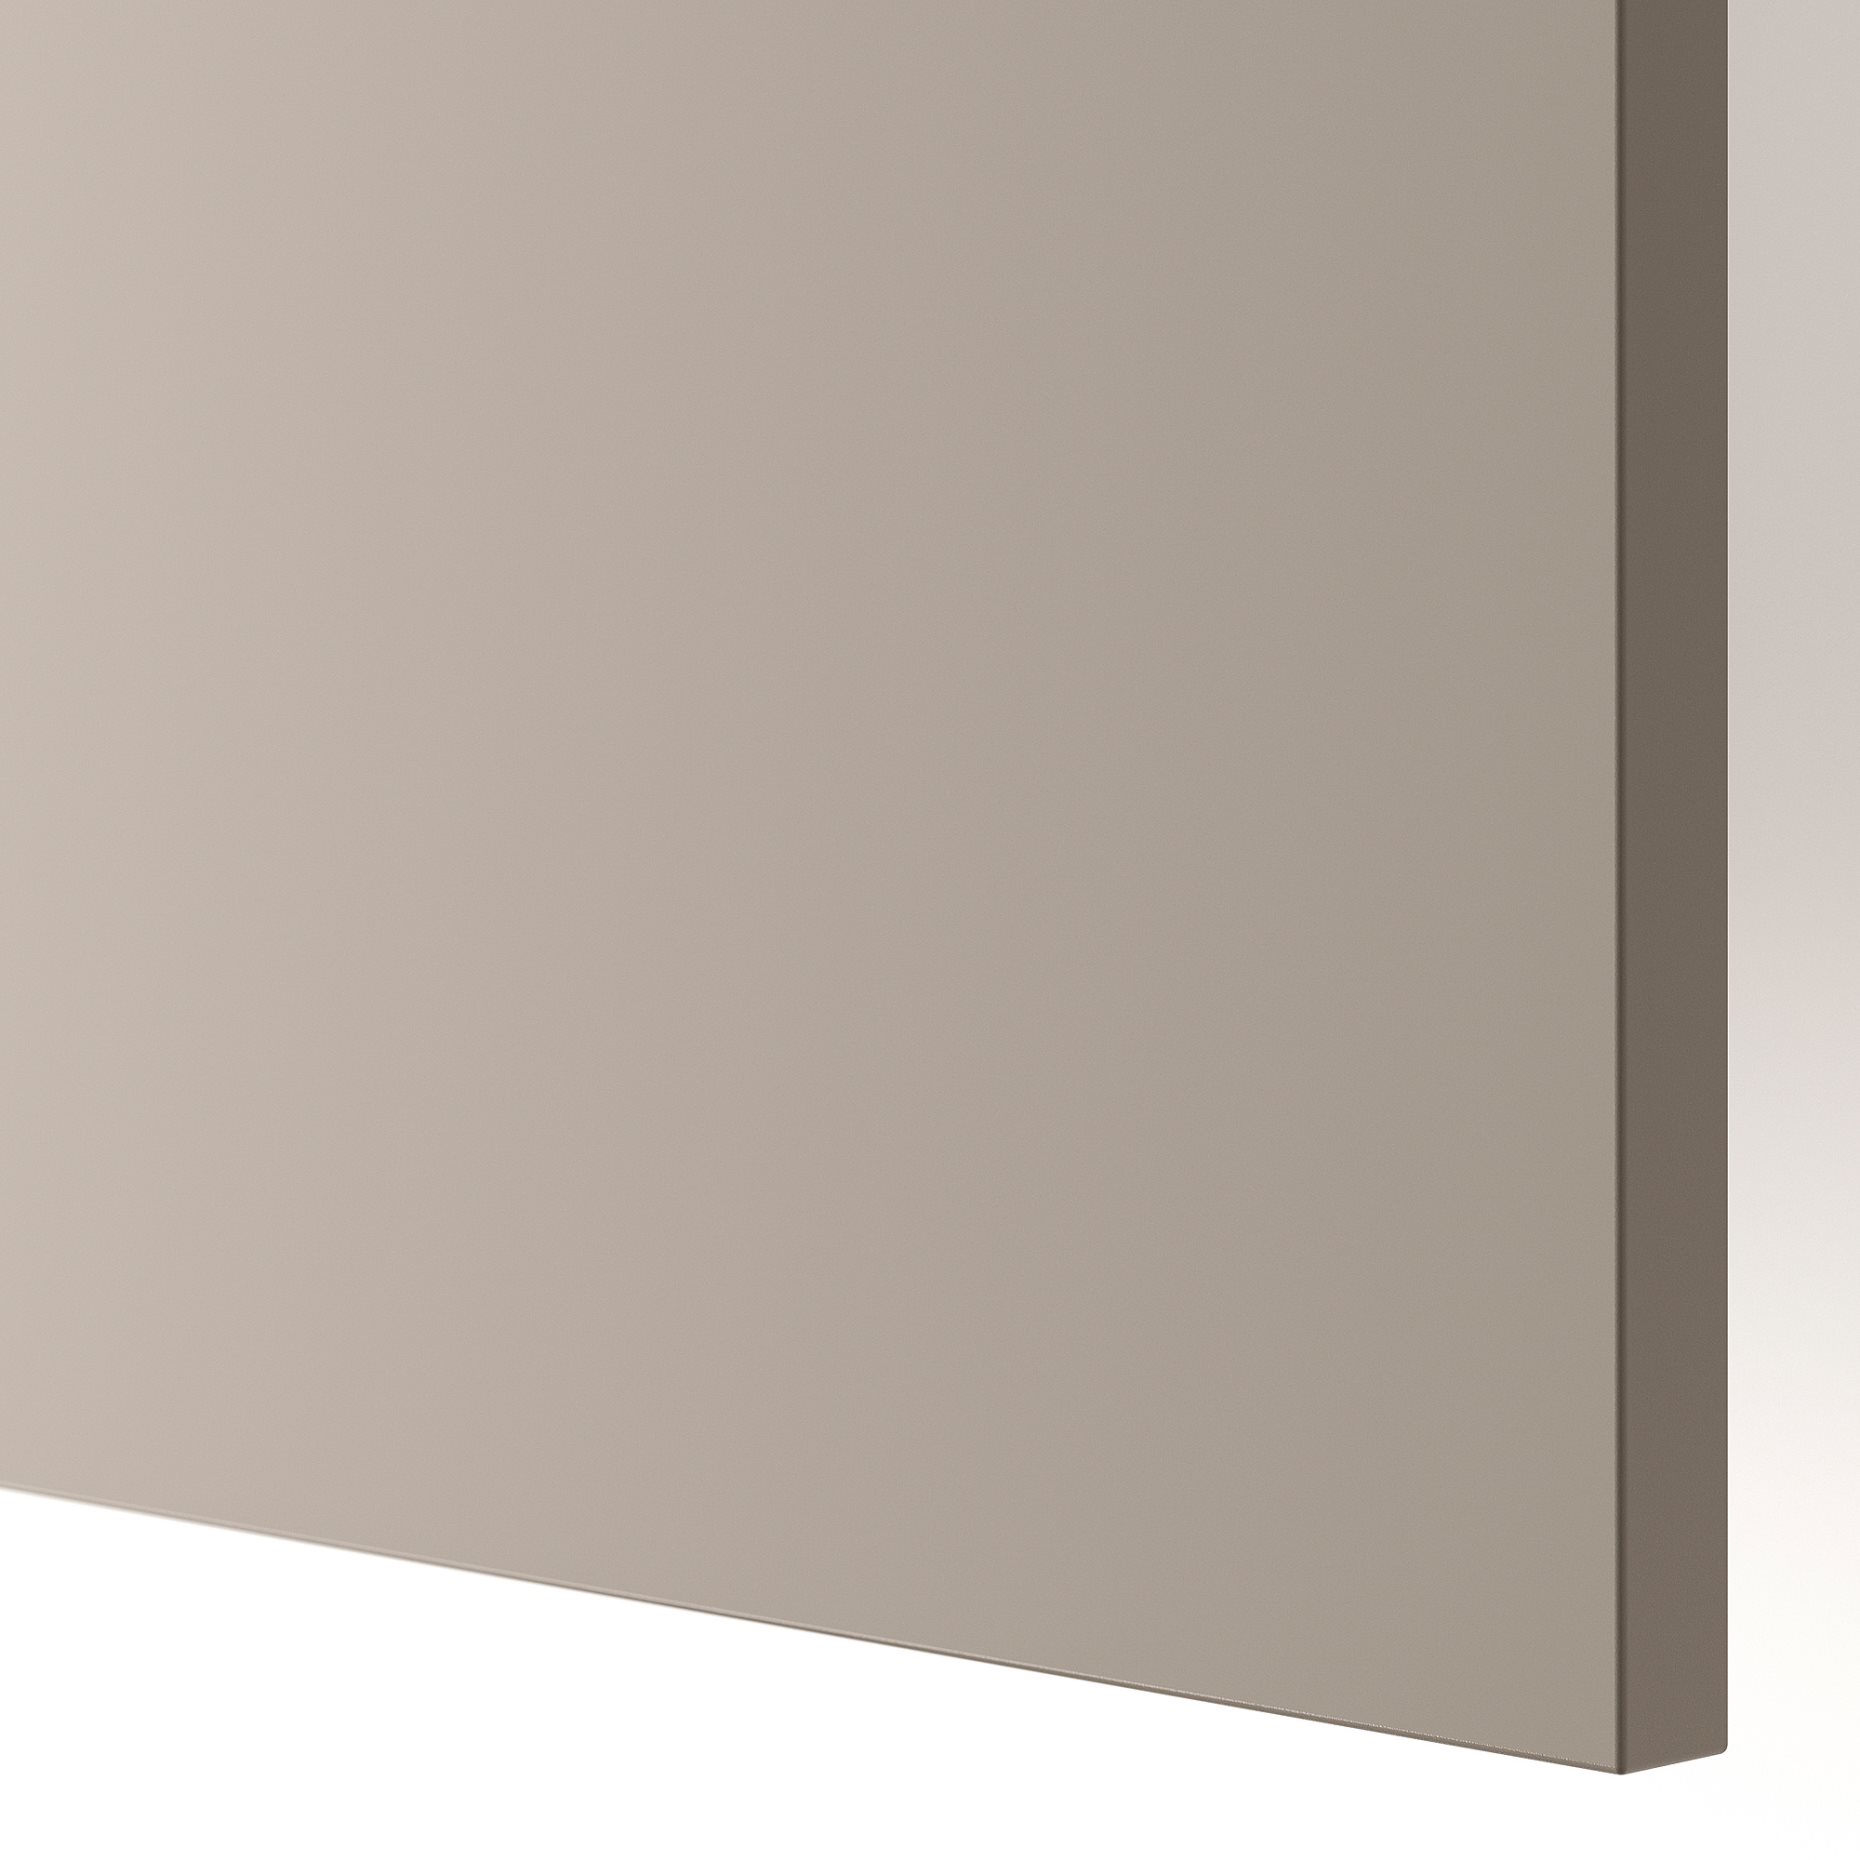 UPPLÖV, πλαϊνή επιφάνεια, 62x80 cm, 004.704.68